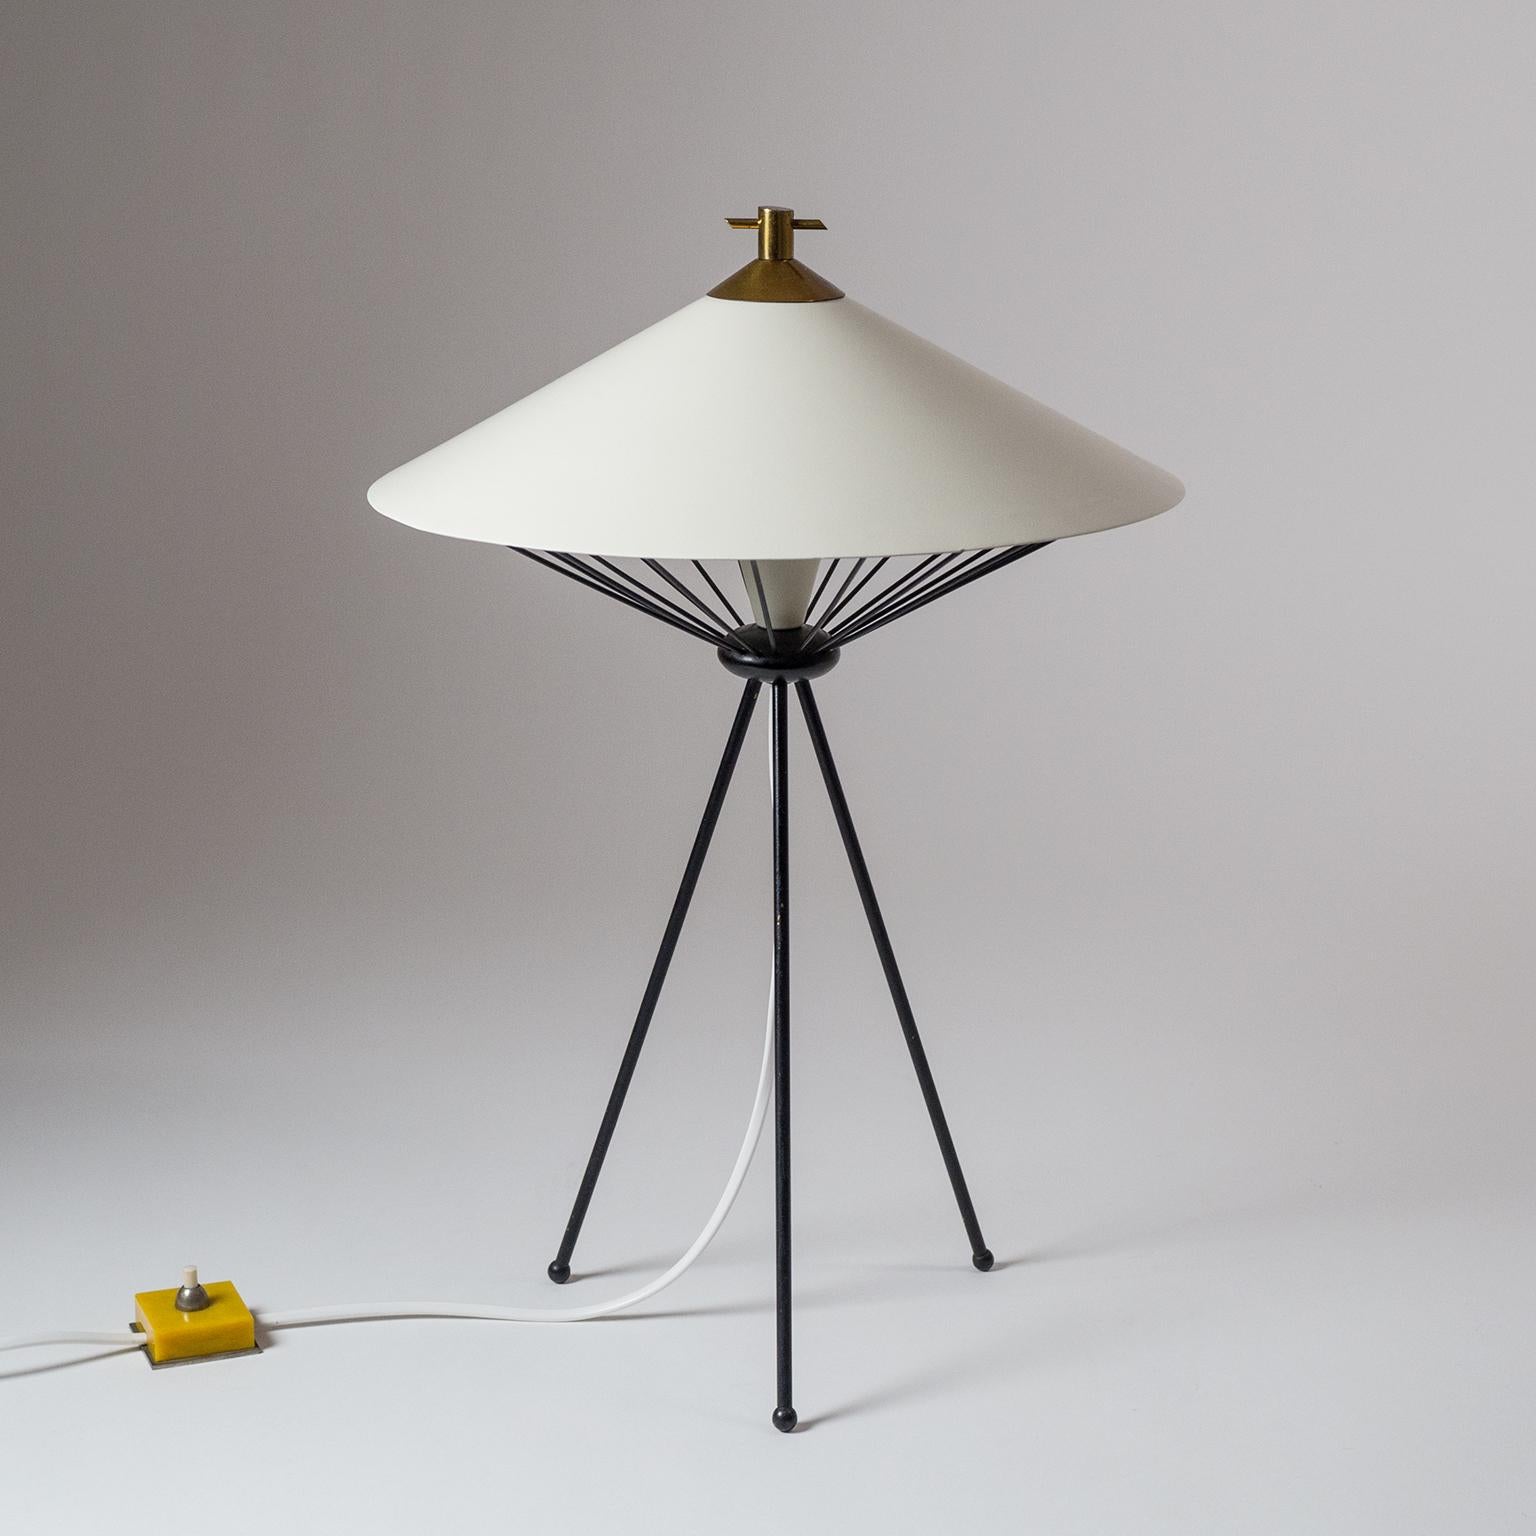 Modernist Italian Tripod Table Lamp, 1950s (Messing)